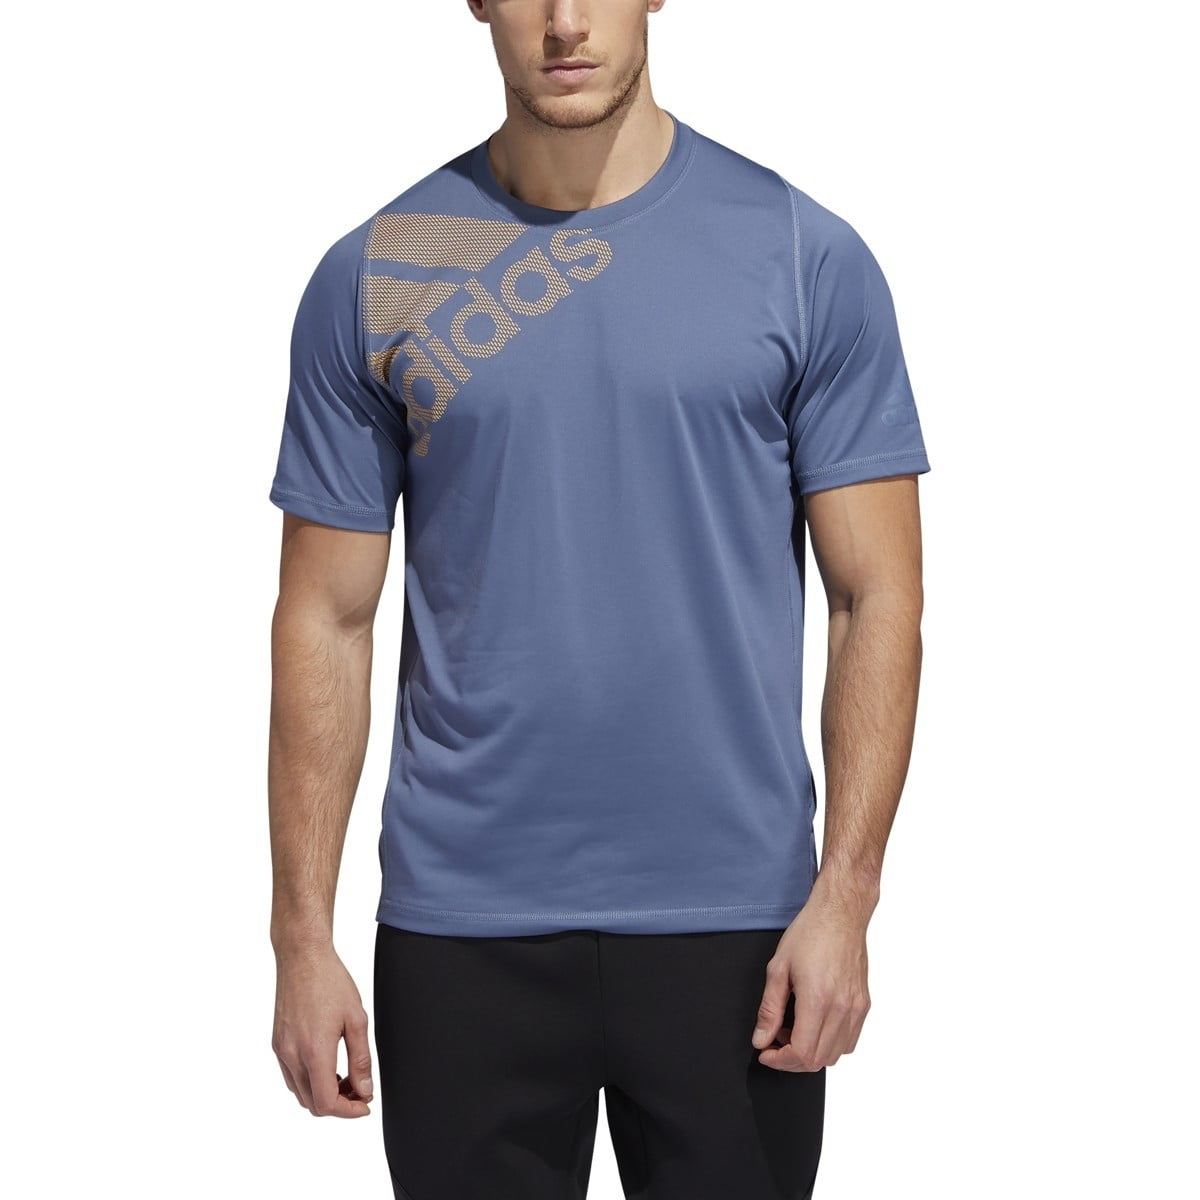 Adidas Men's FreeLift Badge of Sport Graphic Tee Blue Size Small -  Walmart.com